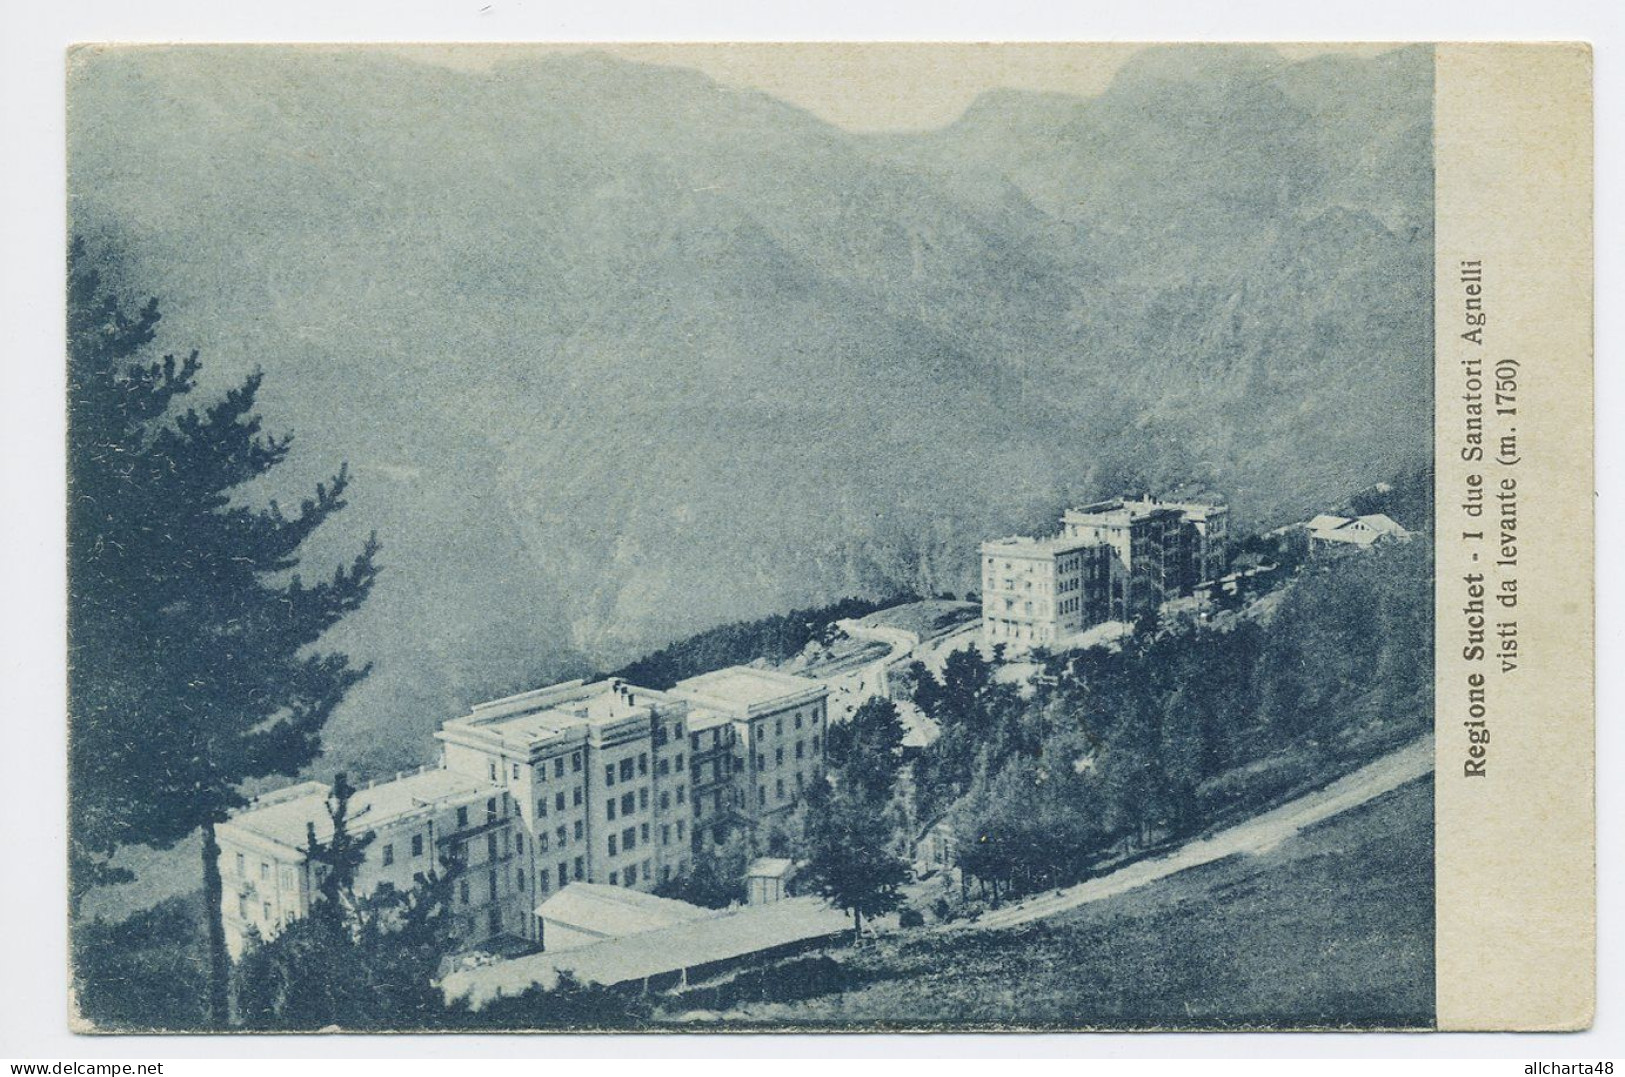 D6264] FENESTRELLE REGIONE SUCHET Torino I DUE SANATORI AGNELLI Cartolina Viaggiata 1939 - Panoramic Views